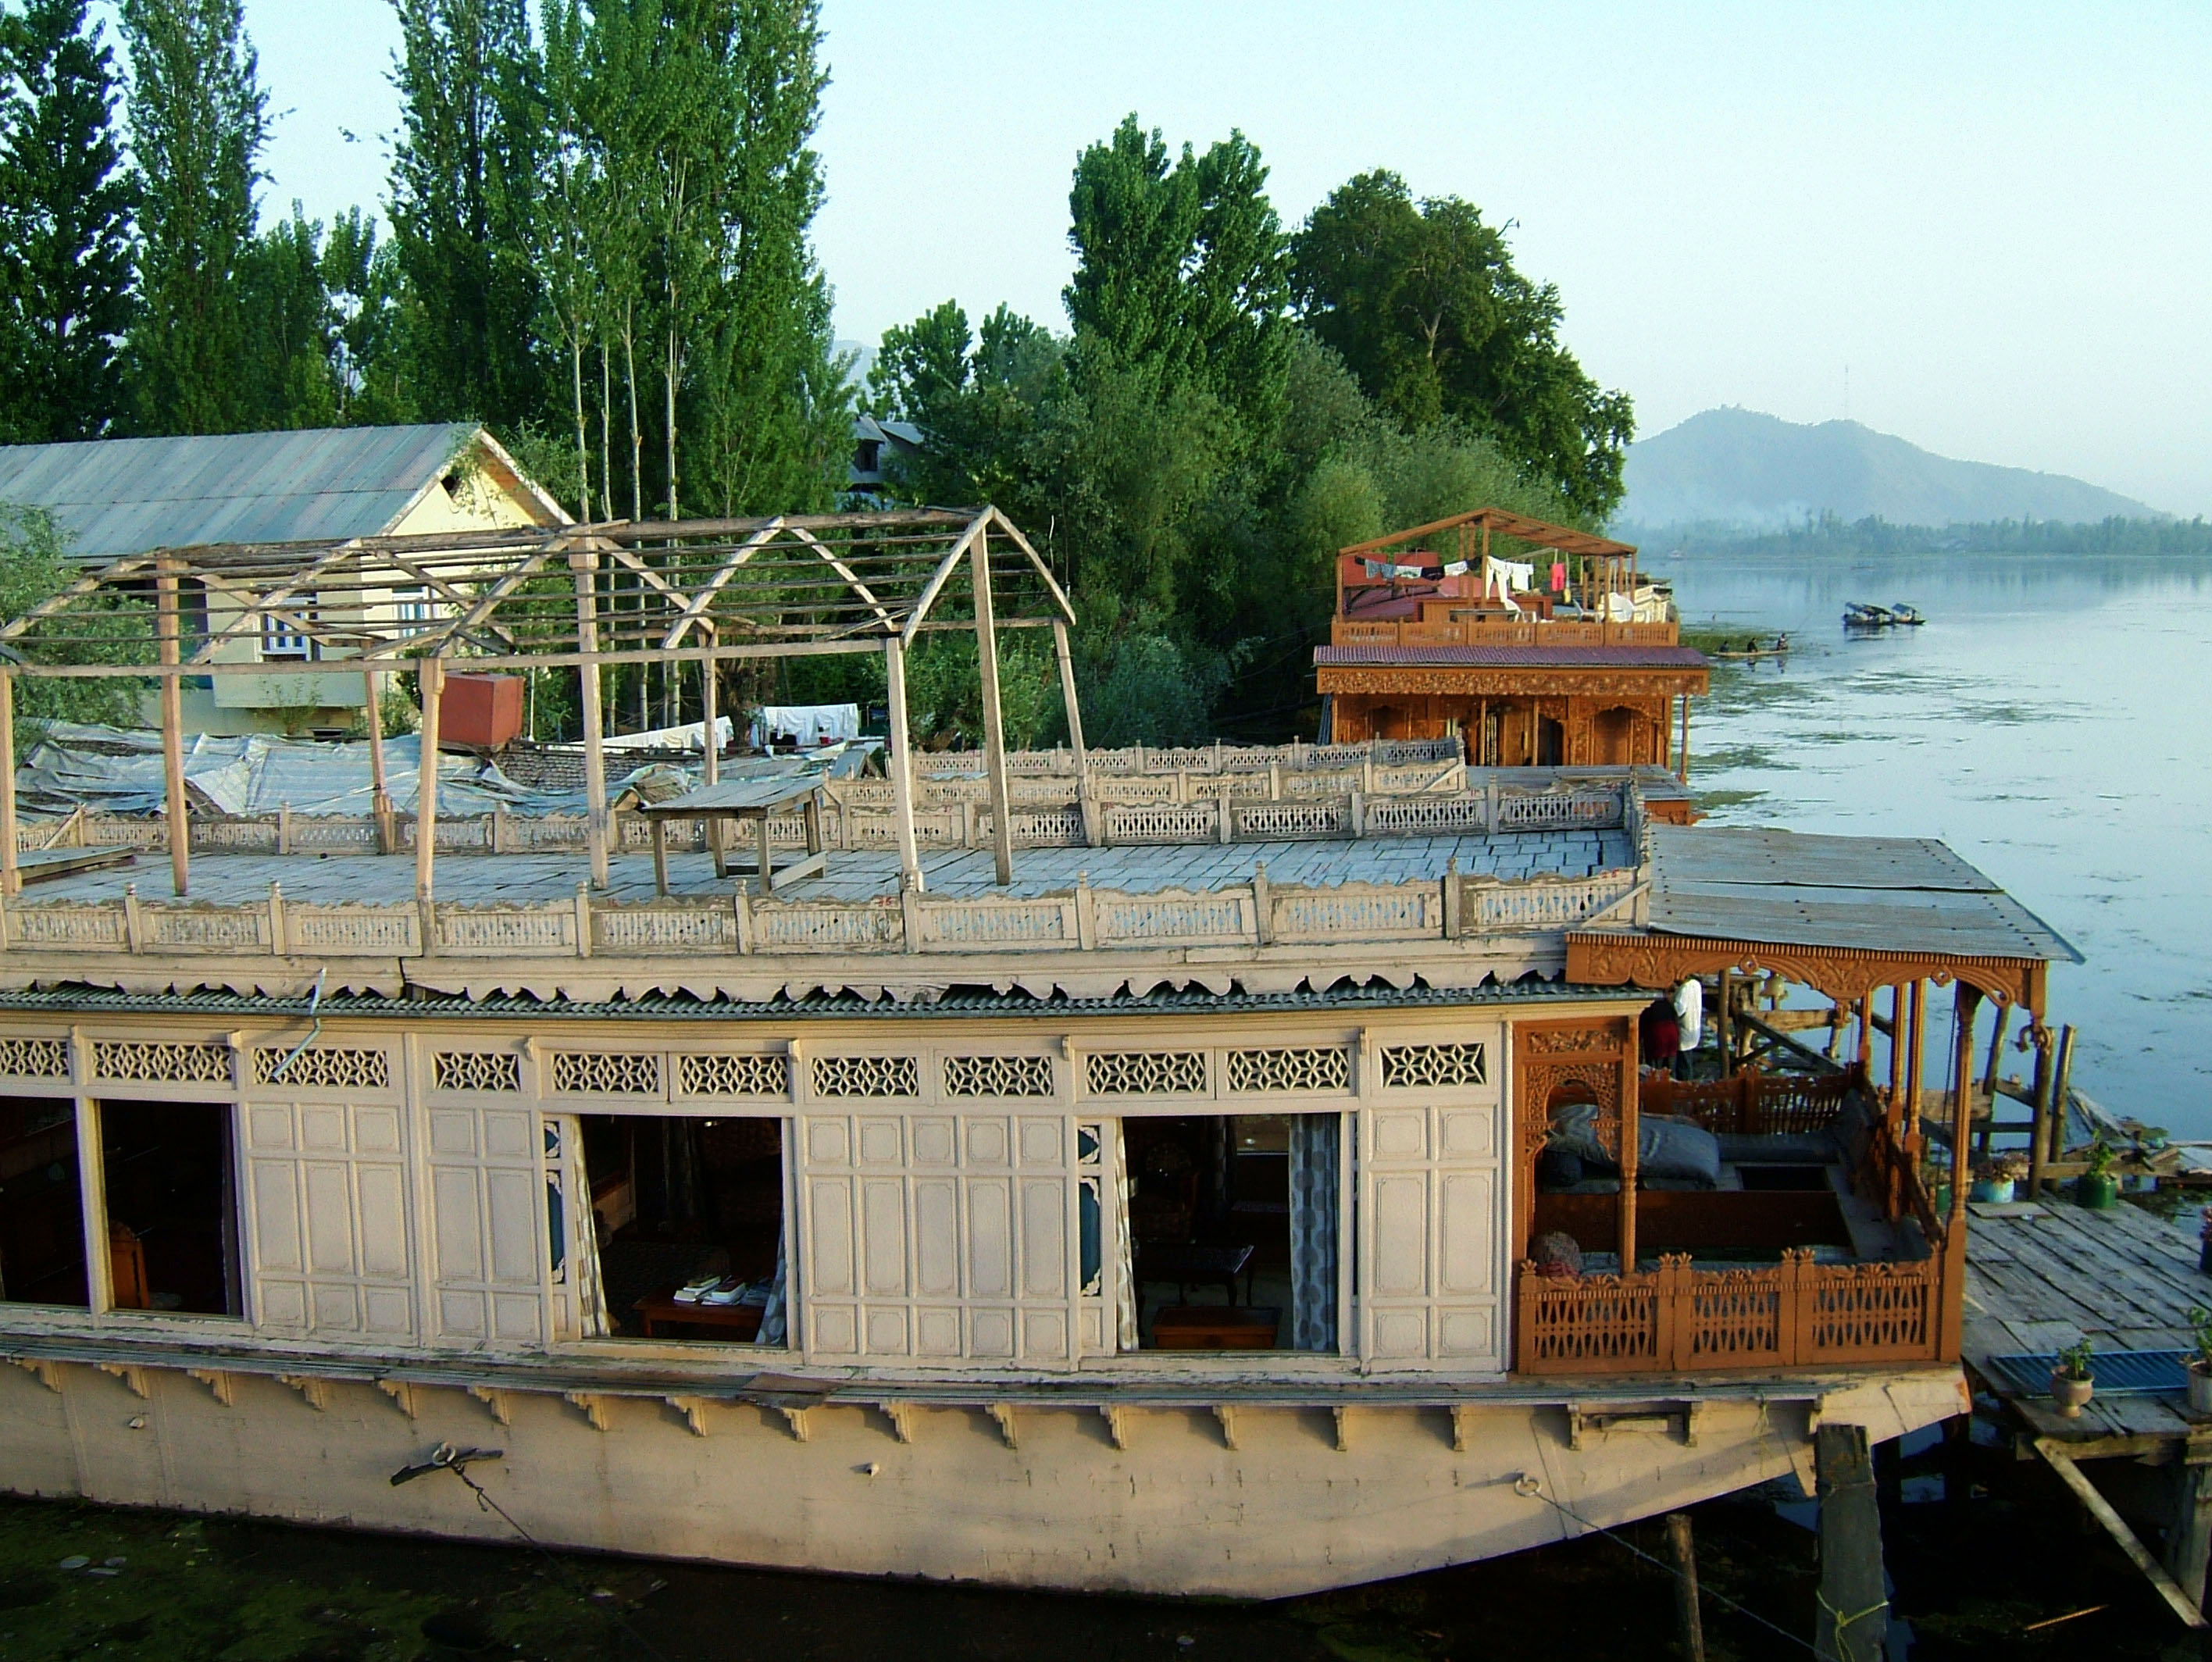 Kashmir houseboats Srinagar Dal lake India Apr 2004 26